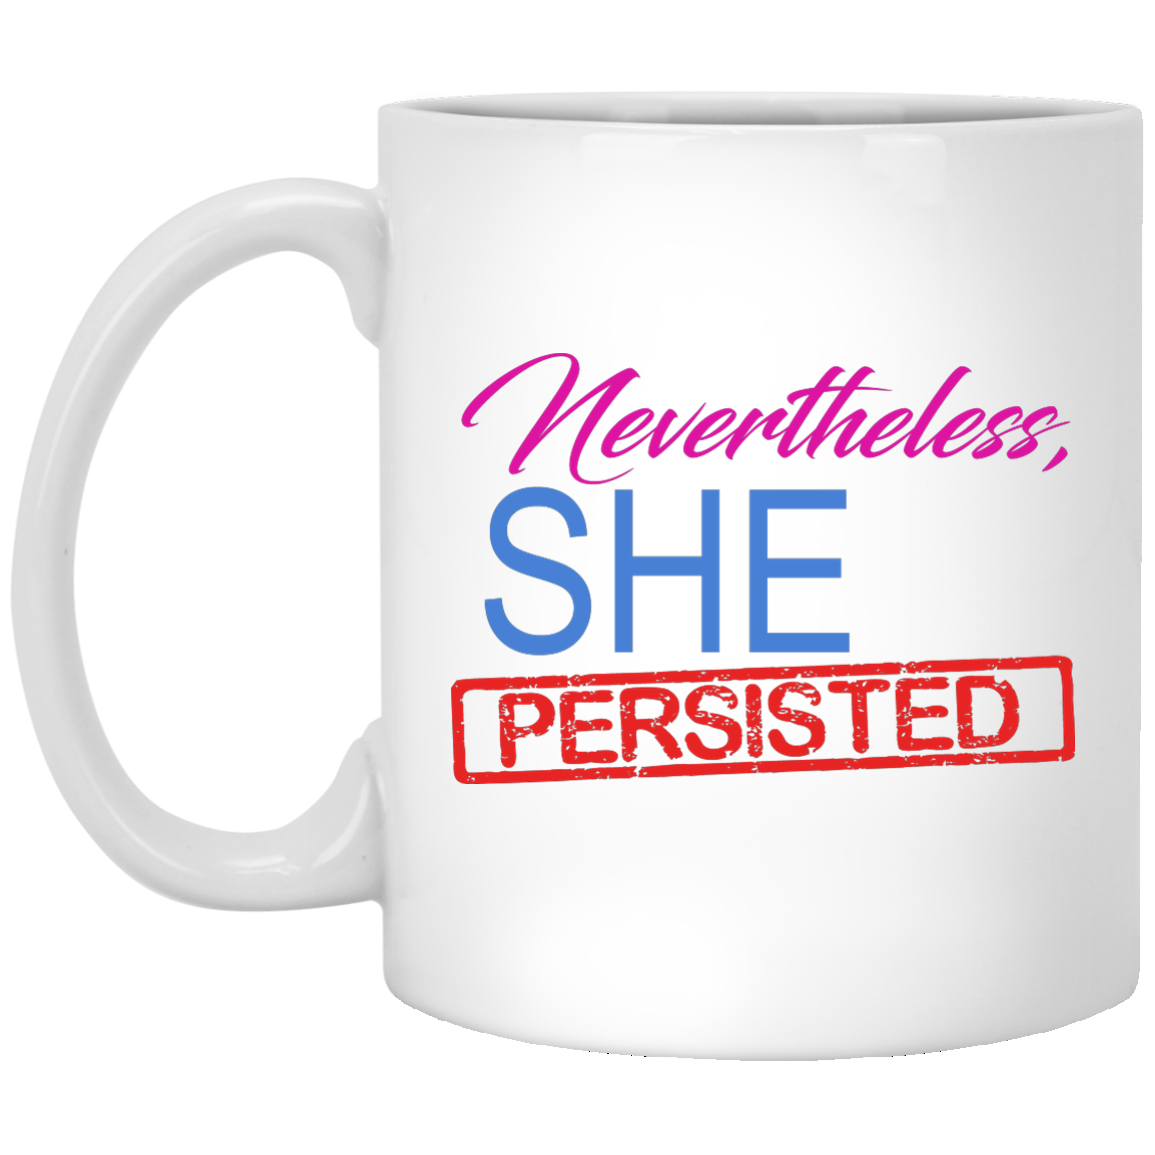 Nevertheless, She Persisted coffee mug